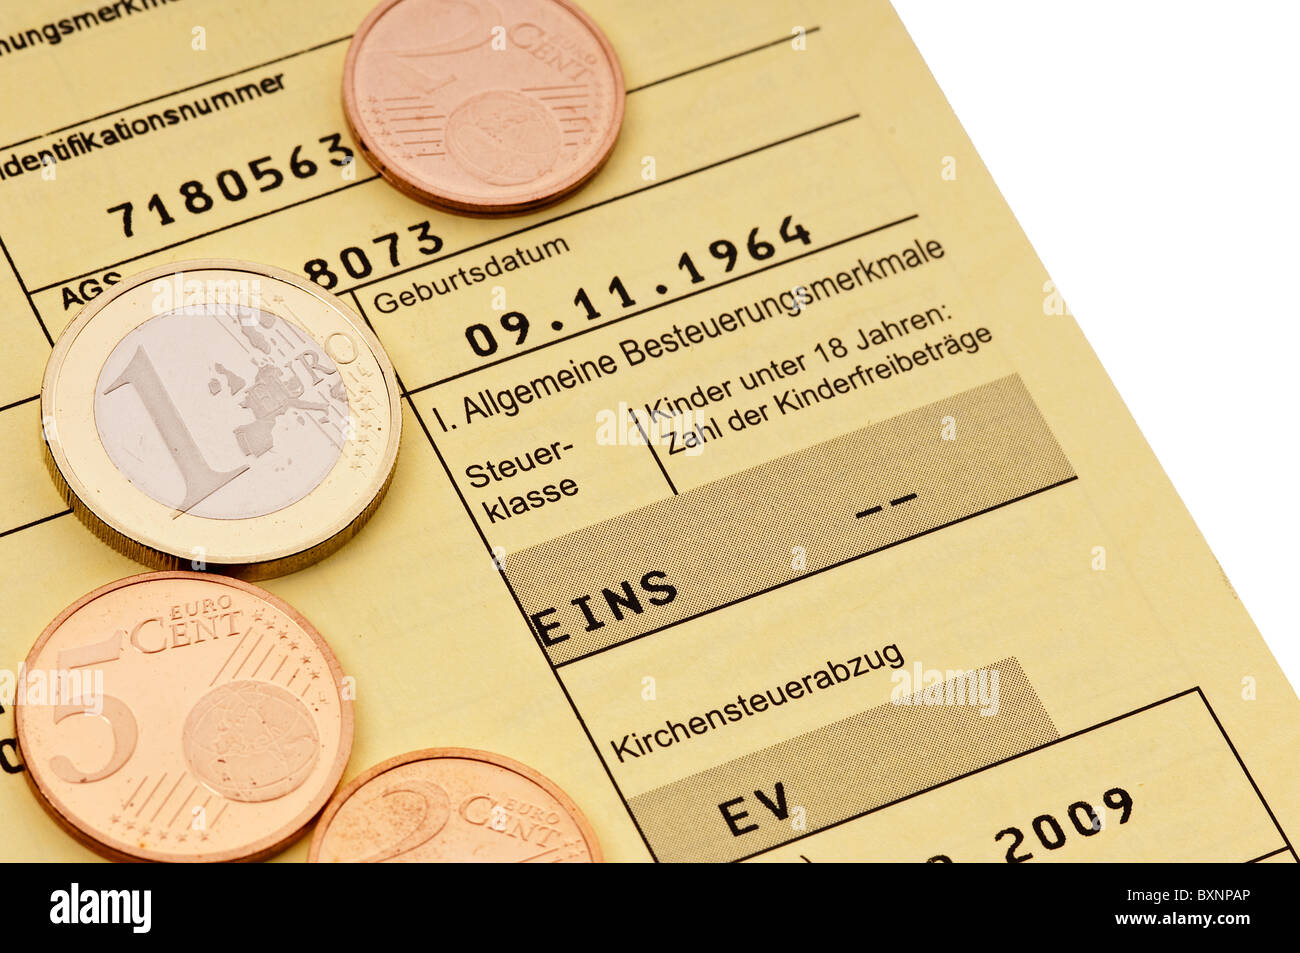 German tax card Stock Photo